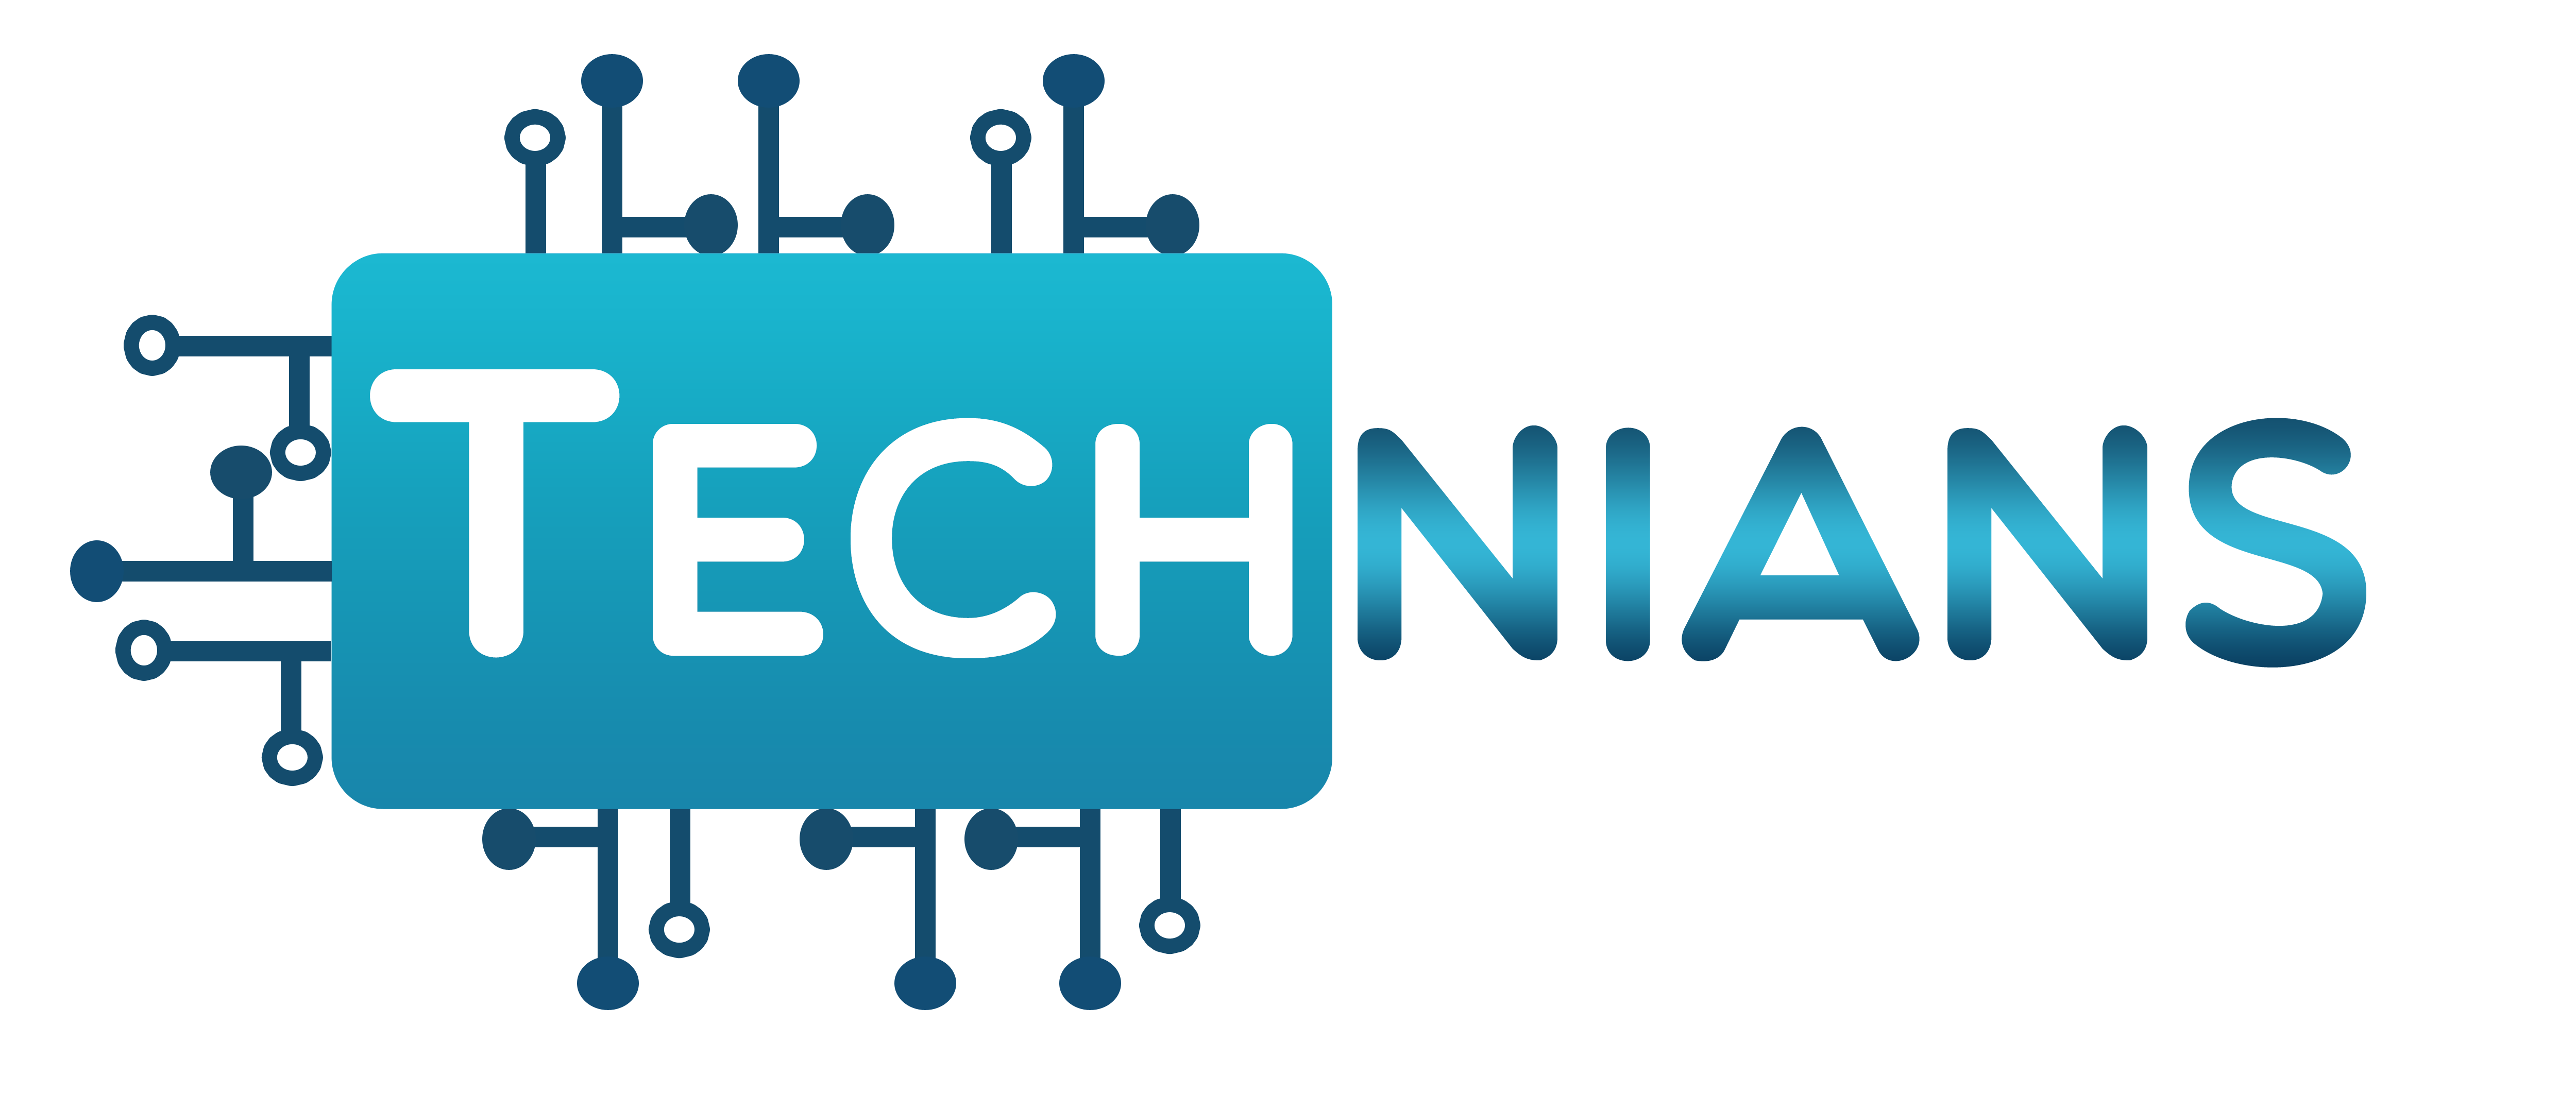 Technians Softech Pvt Ltd